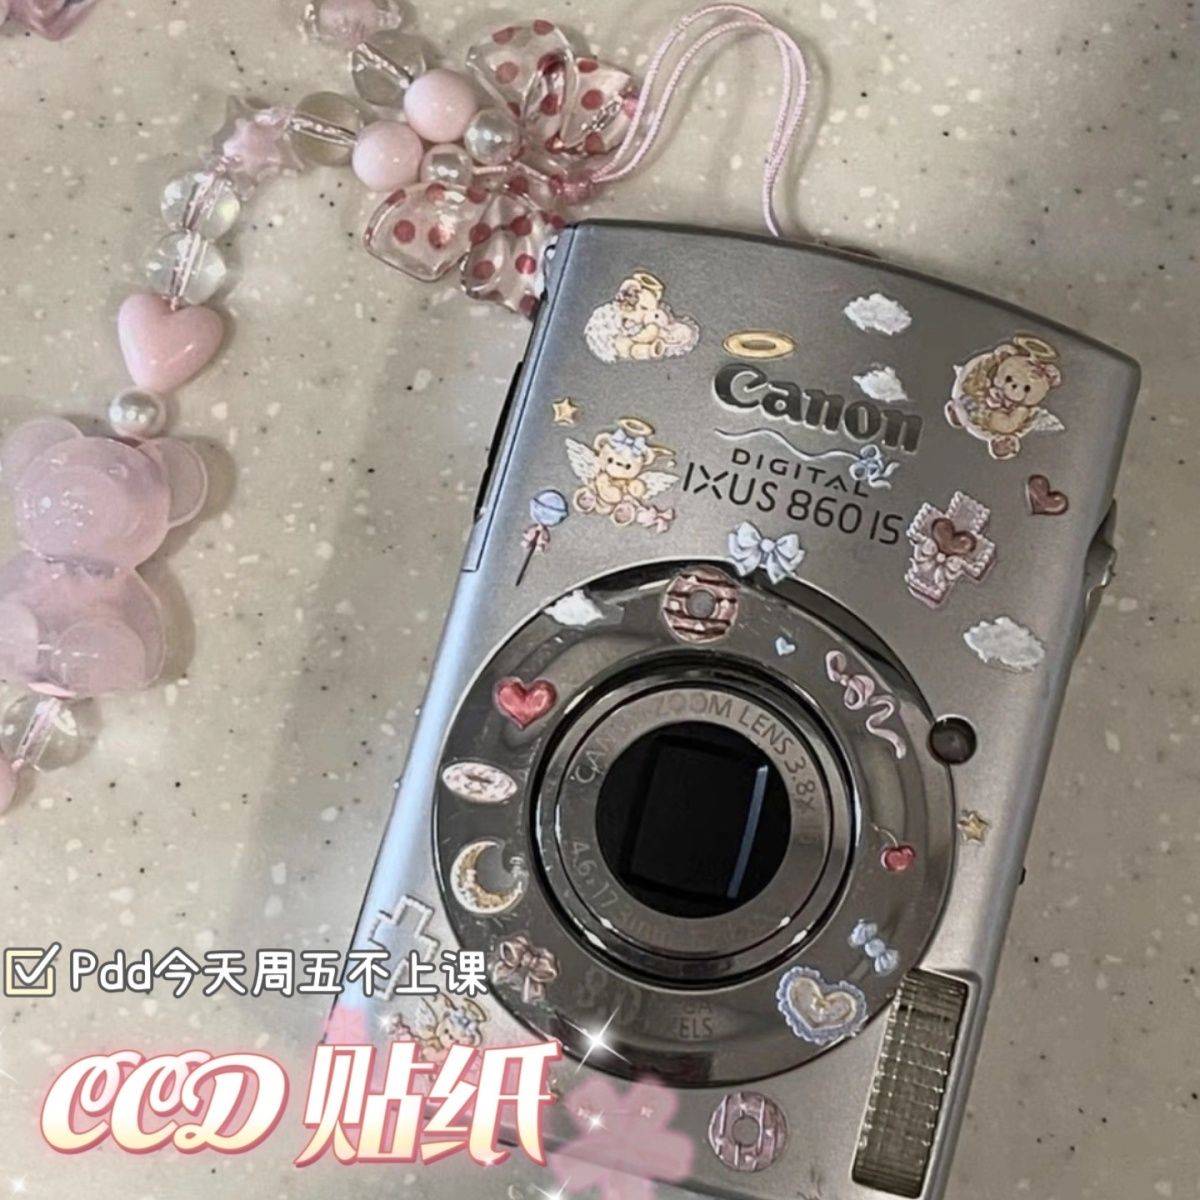 ccd相机装饰贴纸适用于富士佳能索尼大号爱心钻石ins风贴女画立体